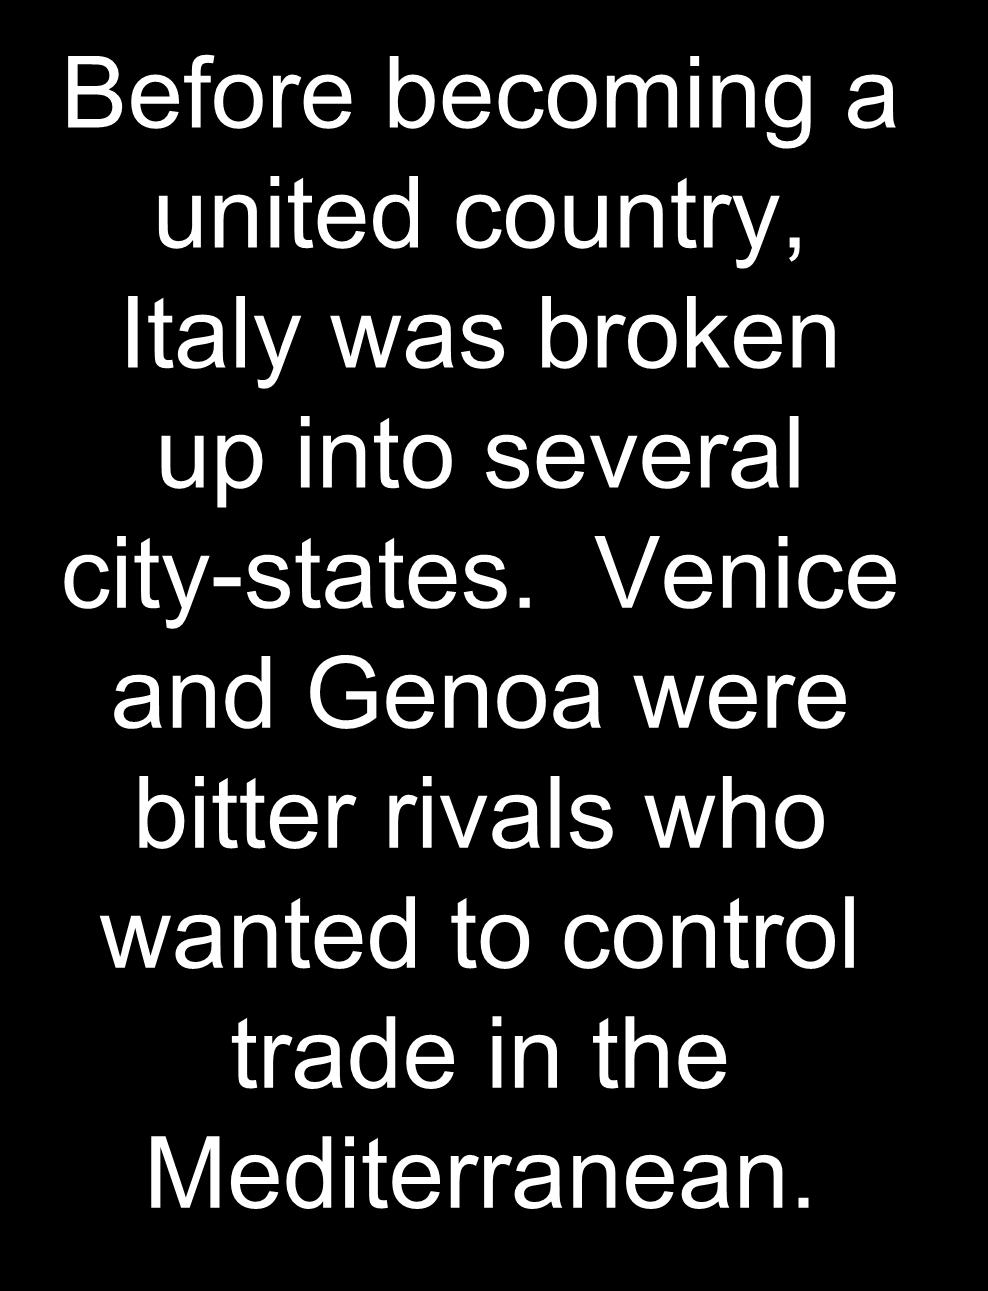 Venice and Genoa were bitter rivals who